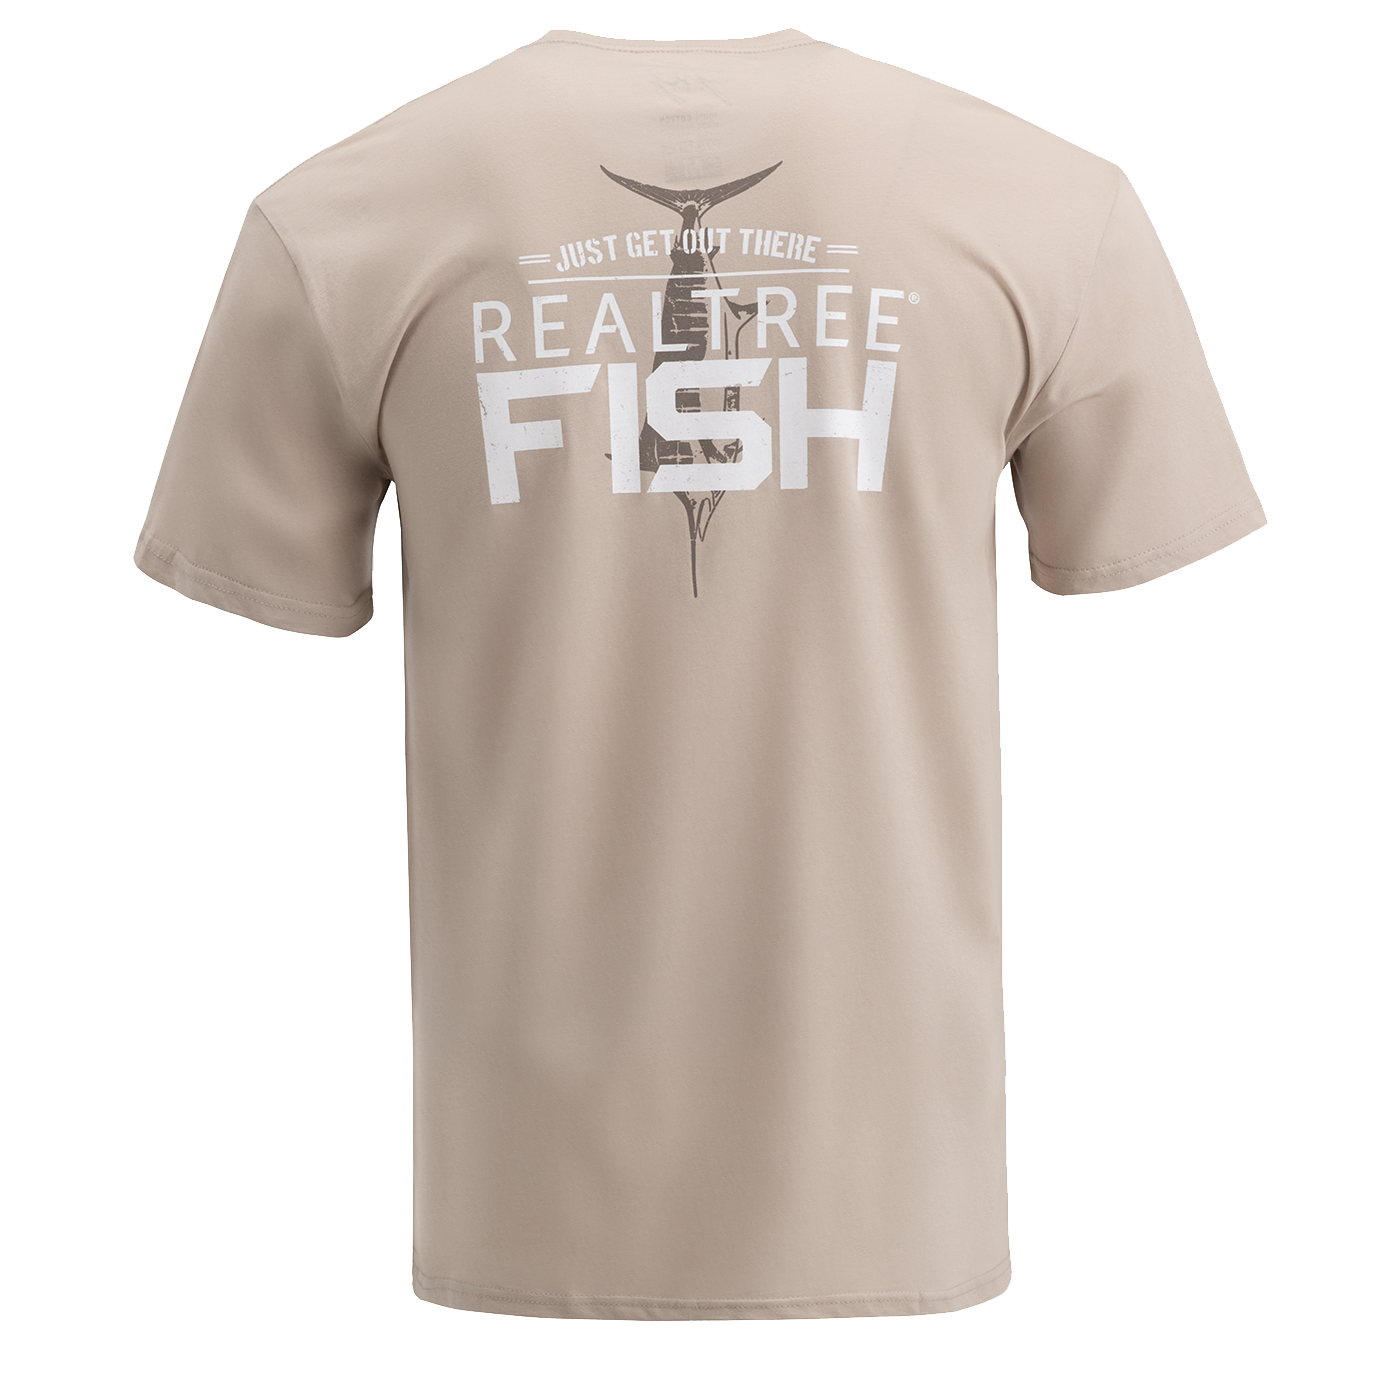 Men's Marlin Short Sleeve Fishing T-Shirt